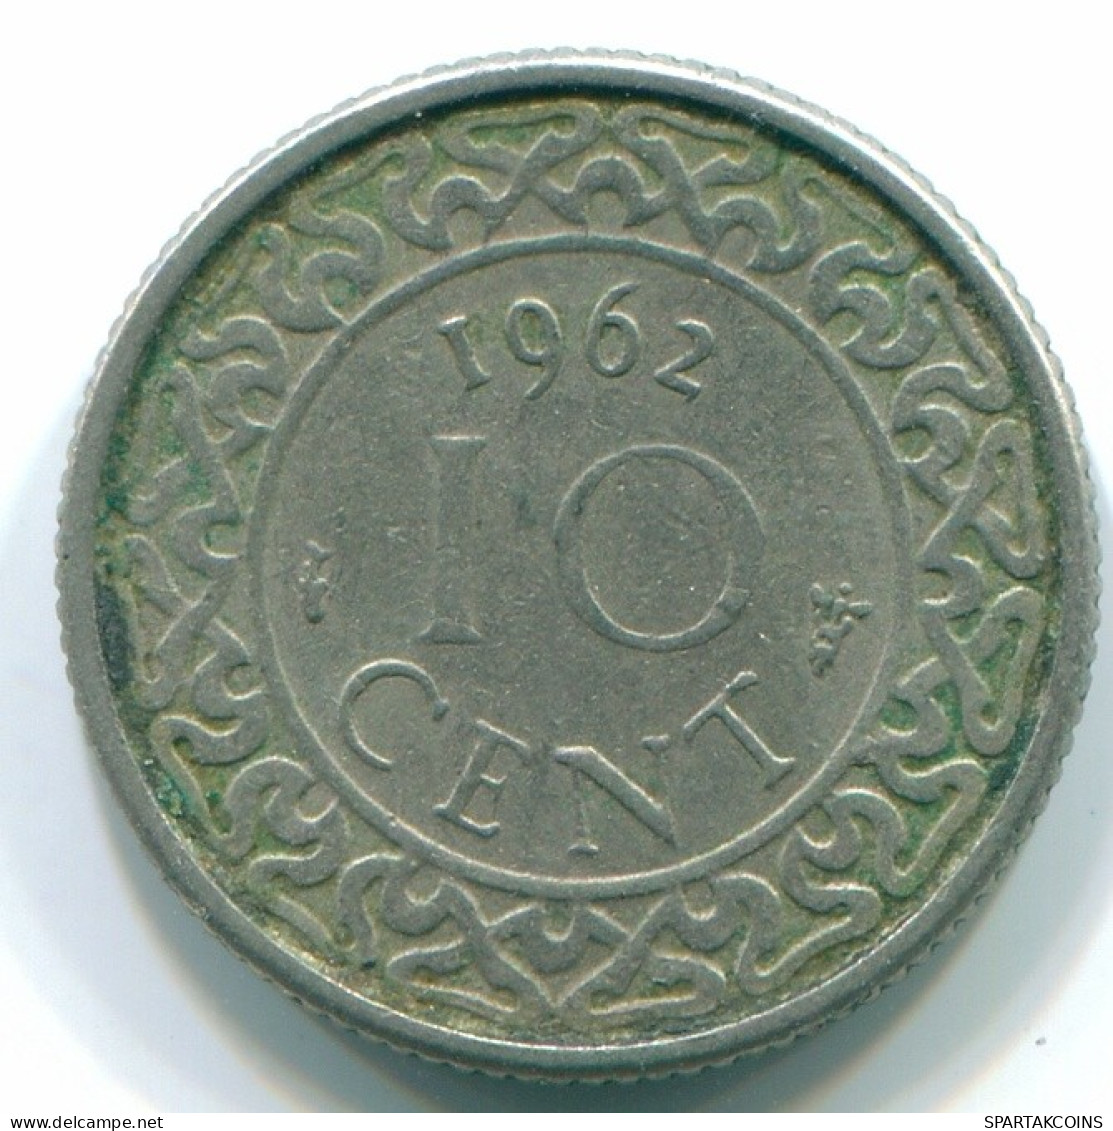 10 CENTS 1962 SURINAME Netherlands Nickel Colonial Coin #S13202.U.A - Suriname 1975 - ...